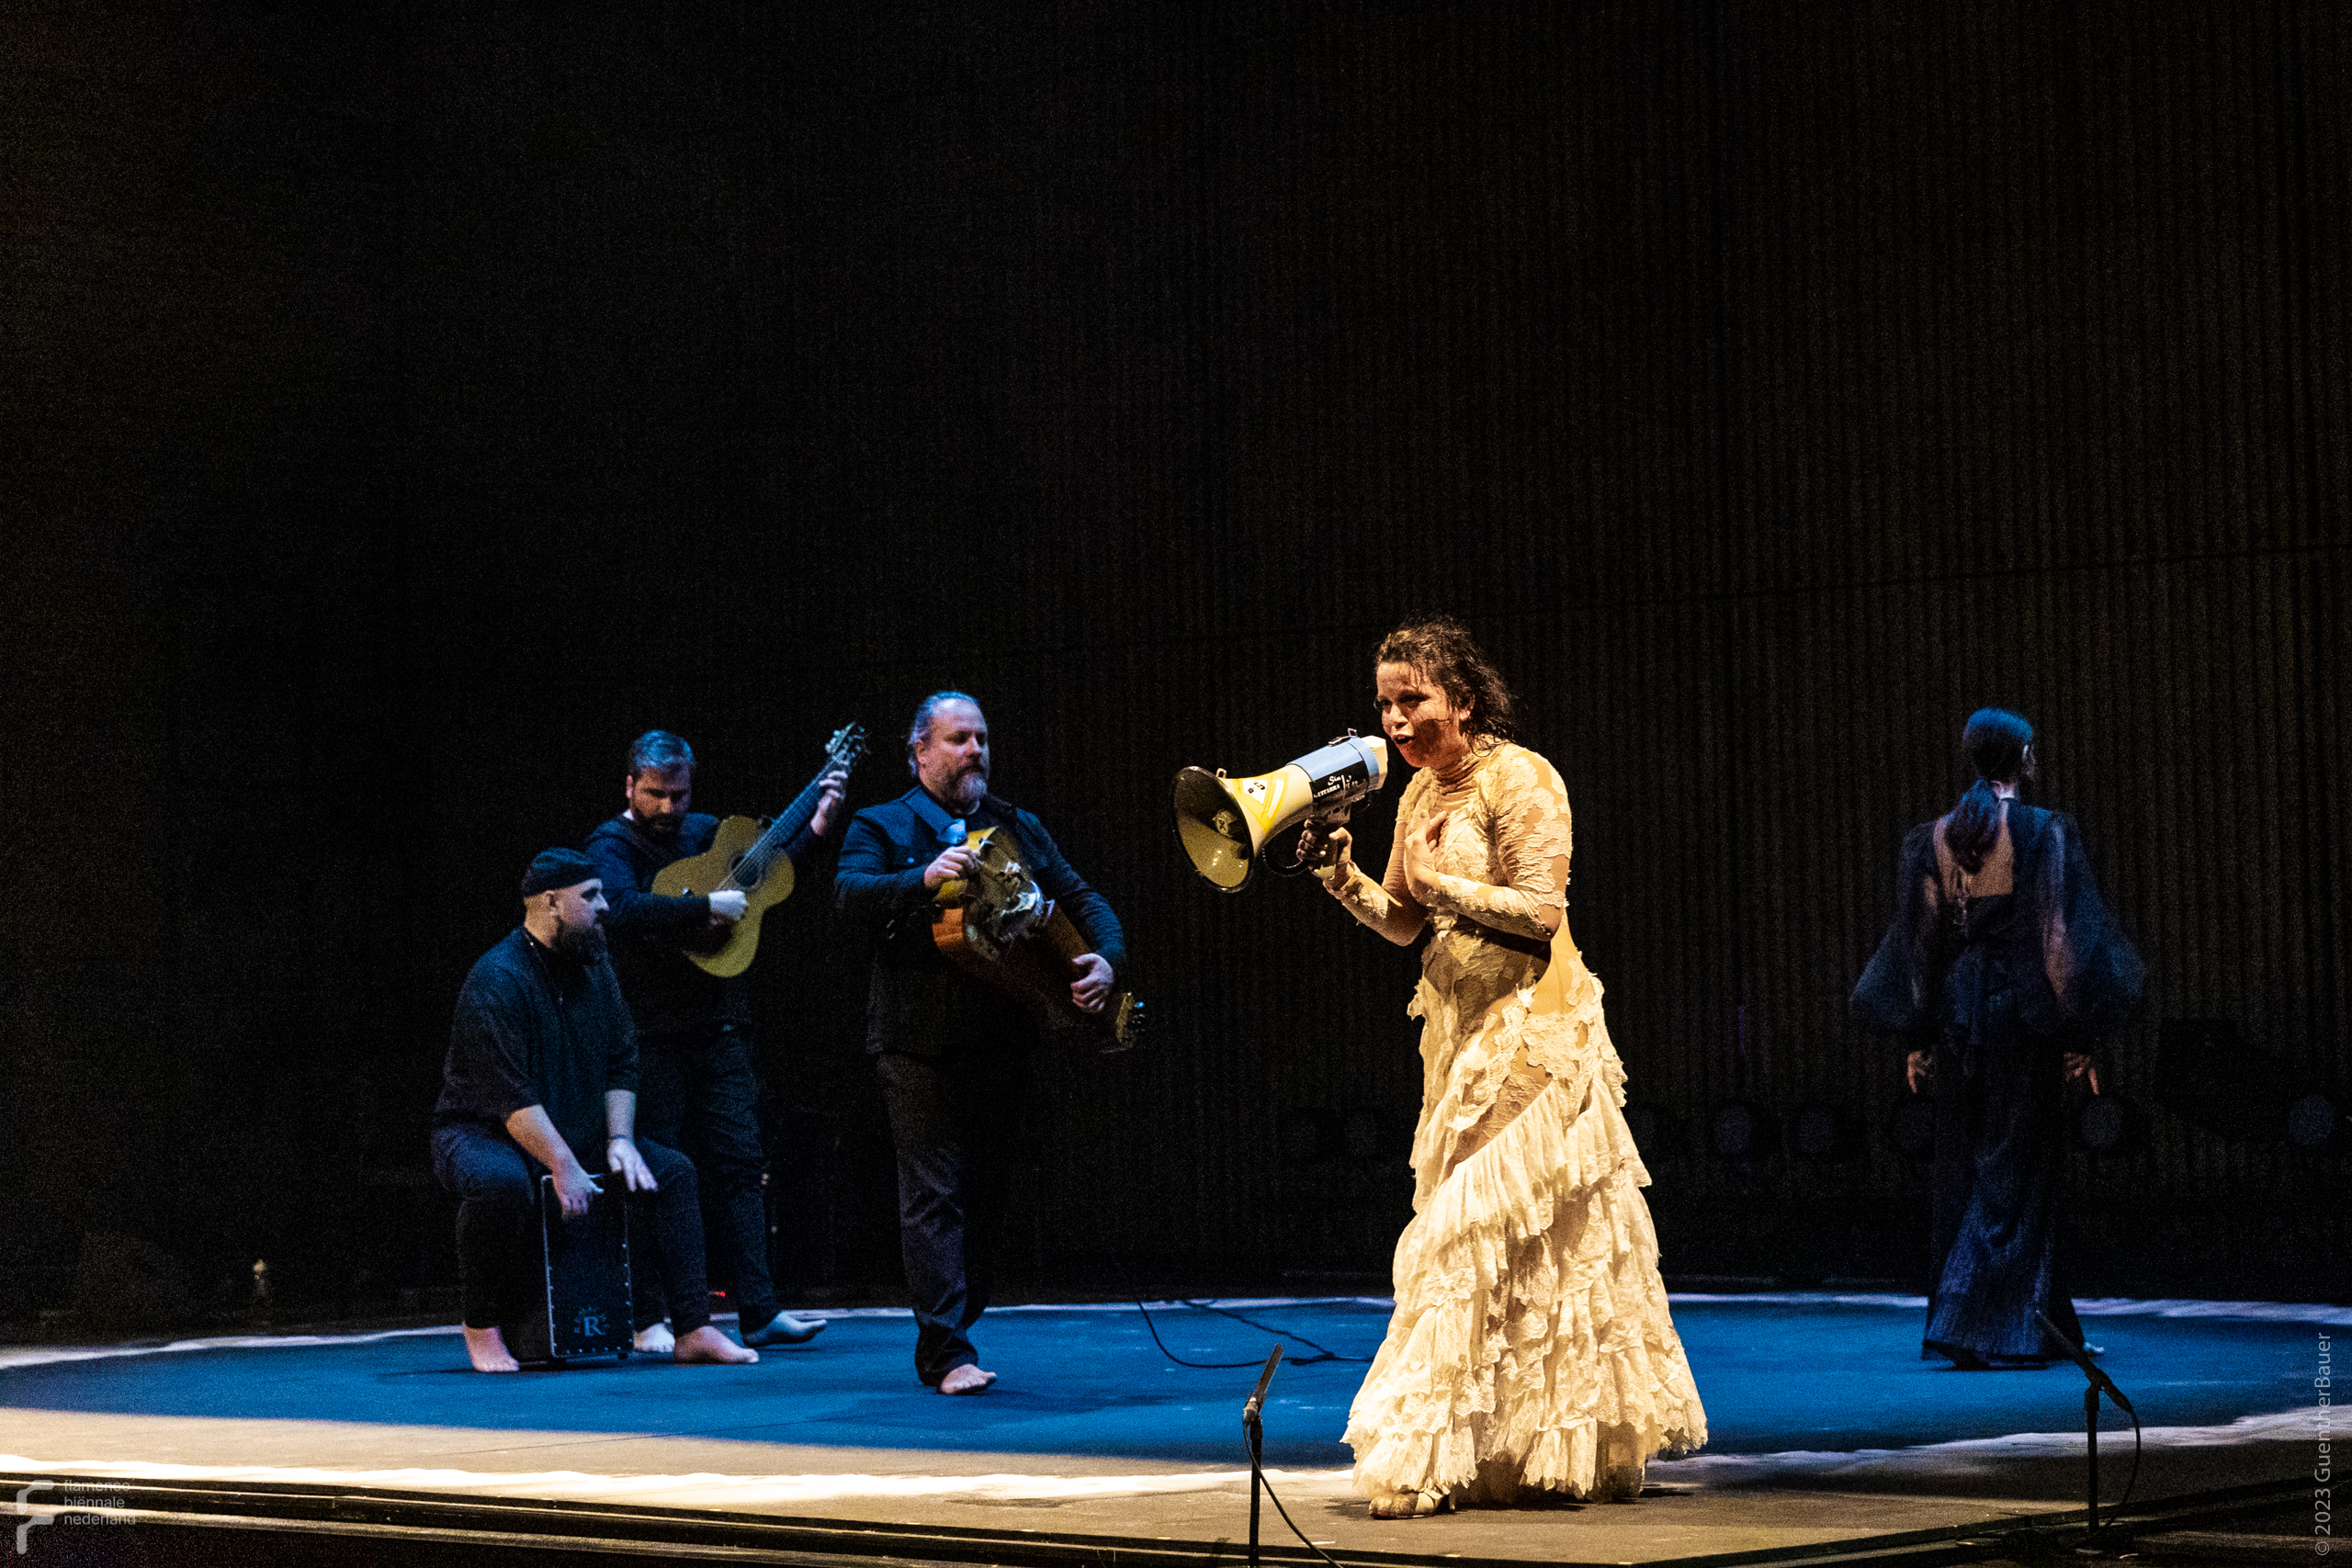 FlamencoBiennale Netherlands; Soleá mit Maria Moreno